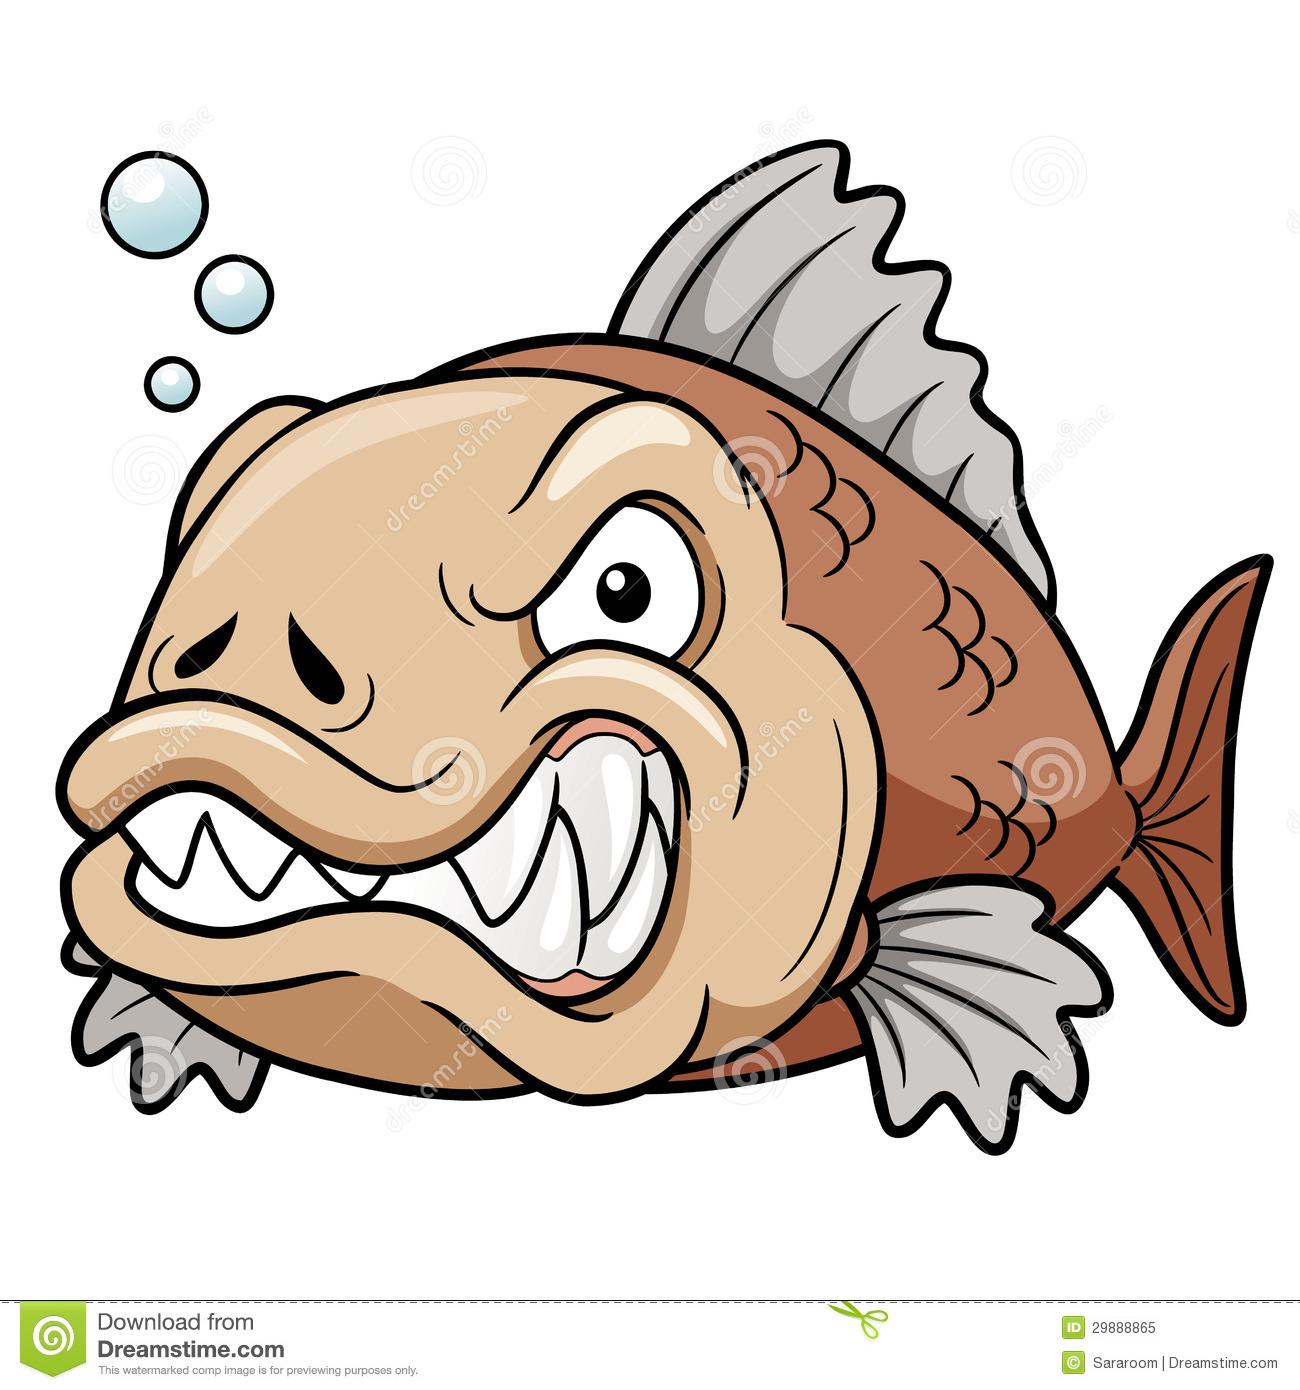 Angry Fish Cartoon Royalty Free Stock Photo   Image  29888865